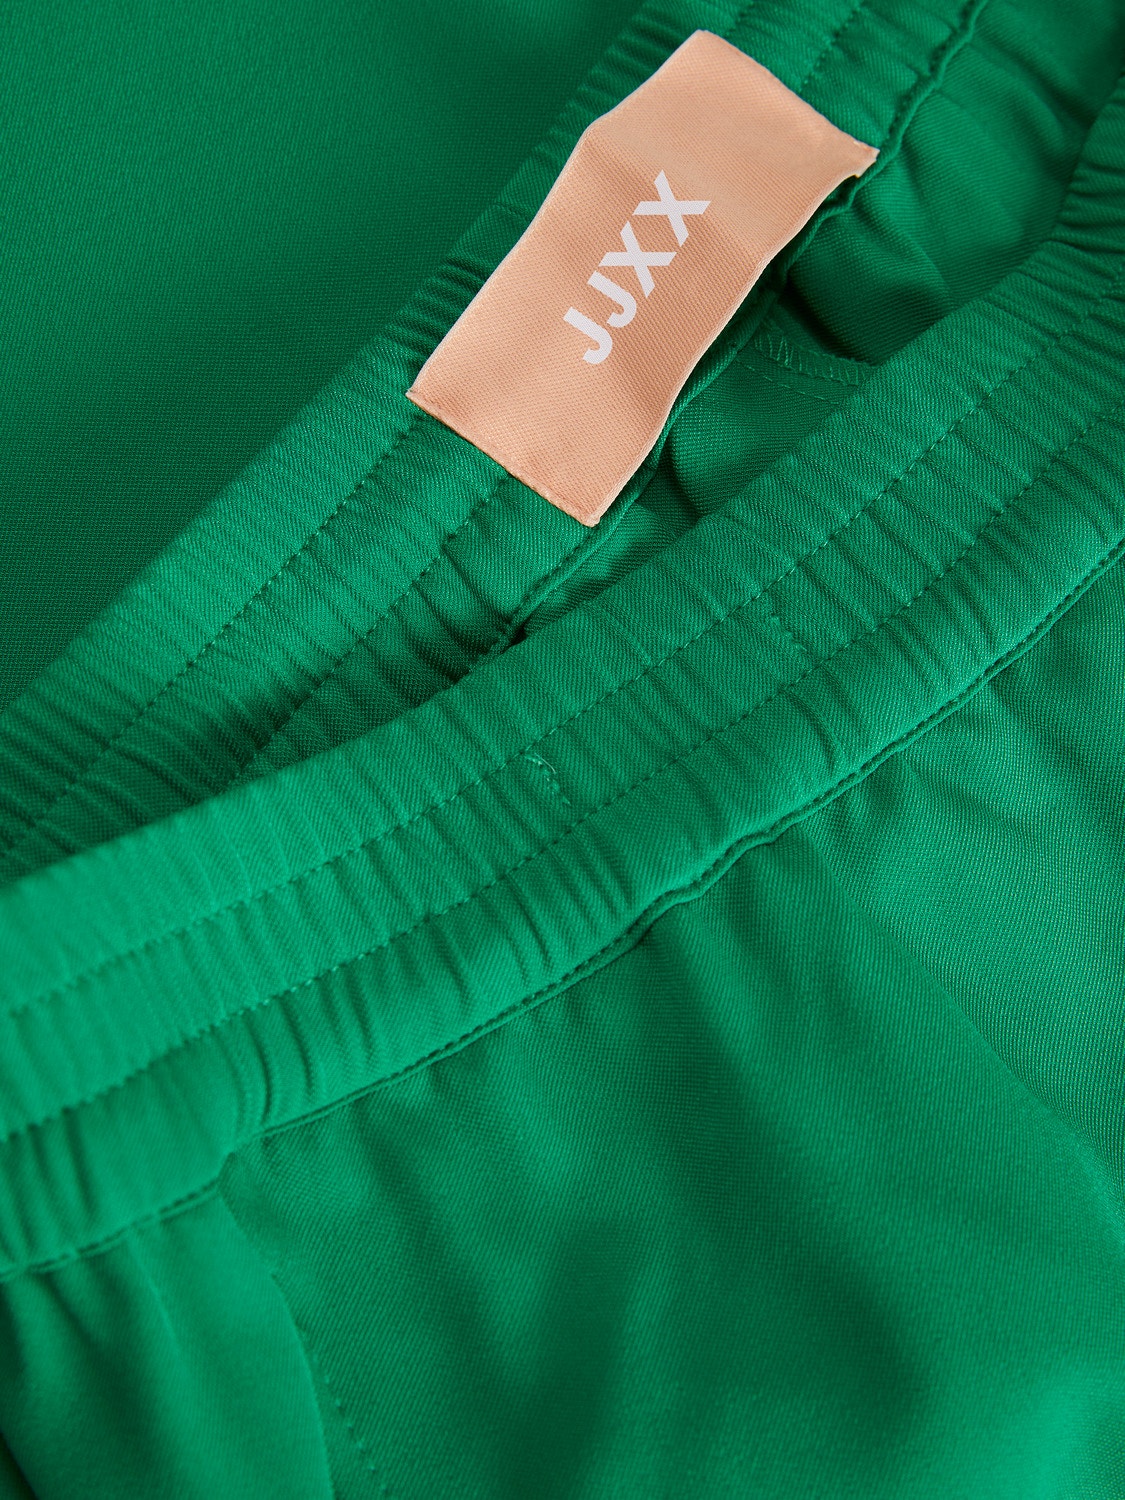 JJXX JXPOPPY Classic trousers -Jolly Green - 12200751